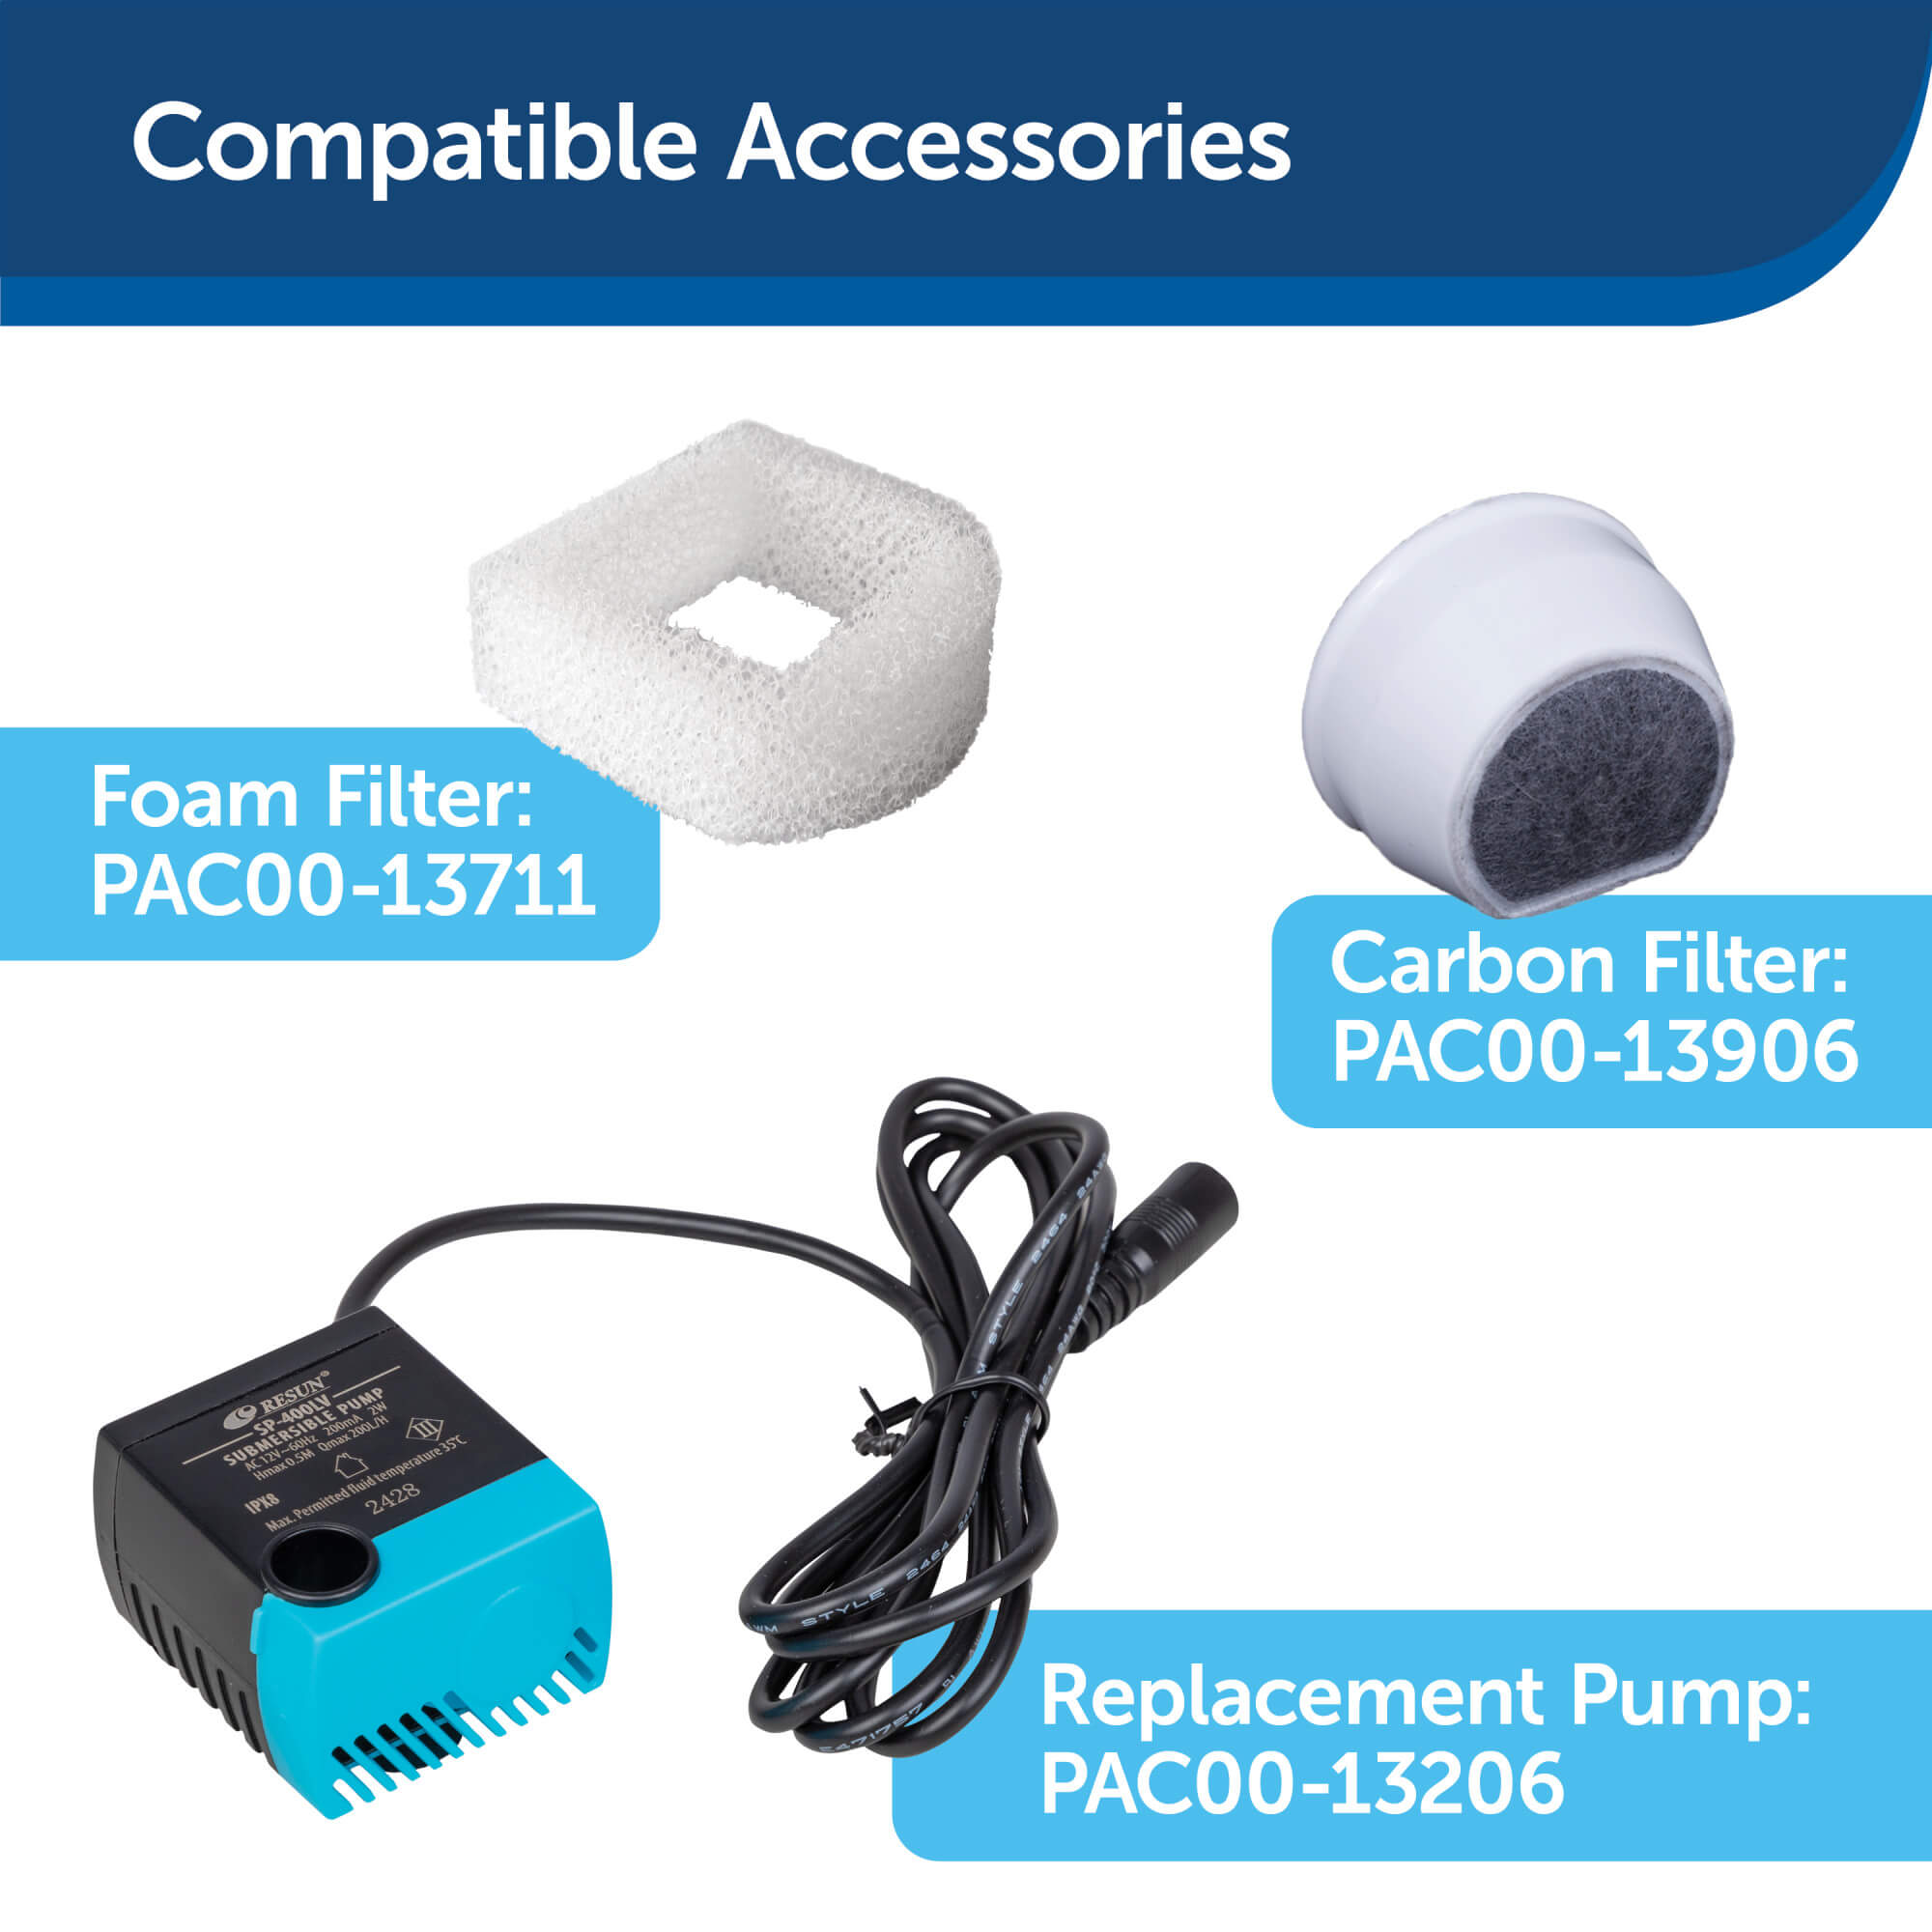 Compatible accessories